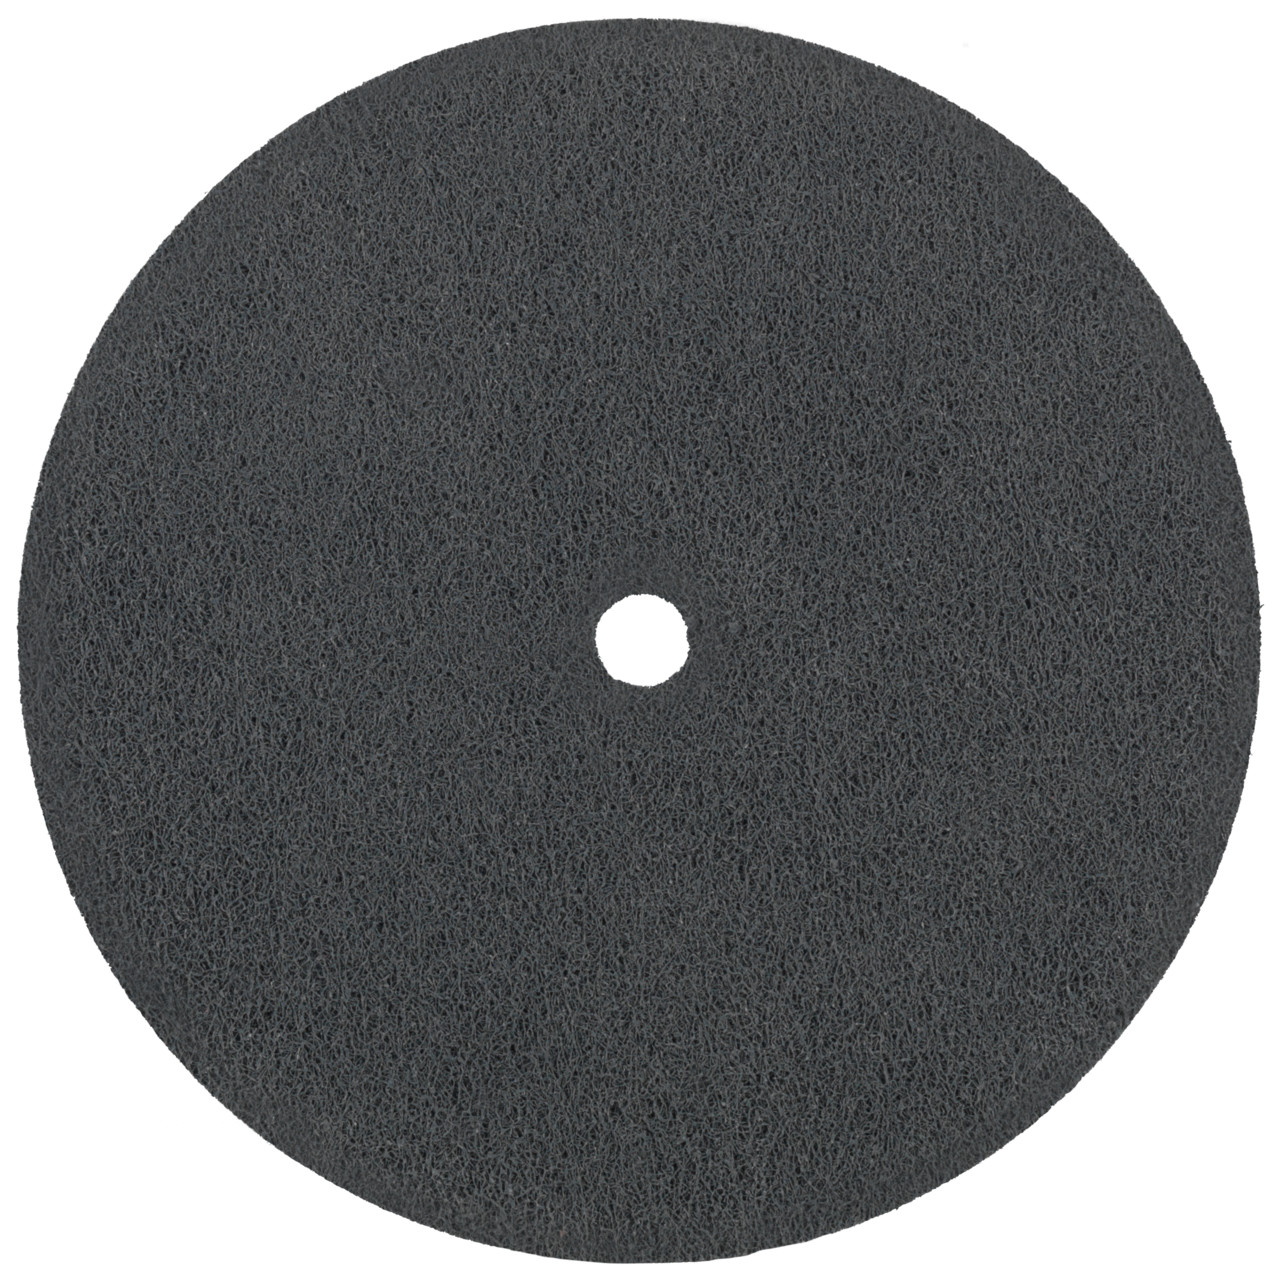 Tyrolit Discos compactos prensados DxDxH 152x25x12,7 Inserto universal, 2 C FEIN, forma: 1, Art. 34190298